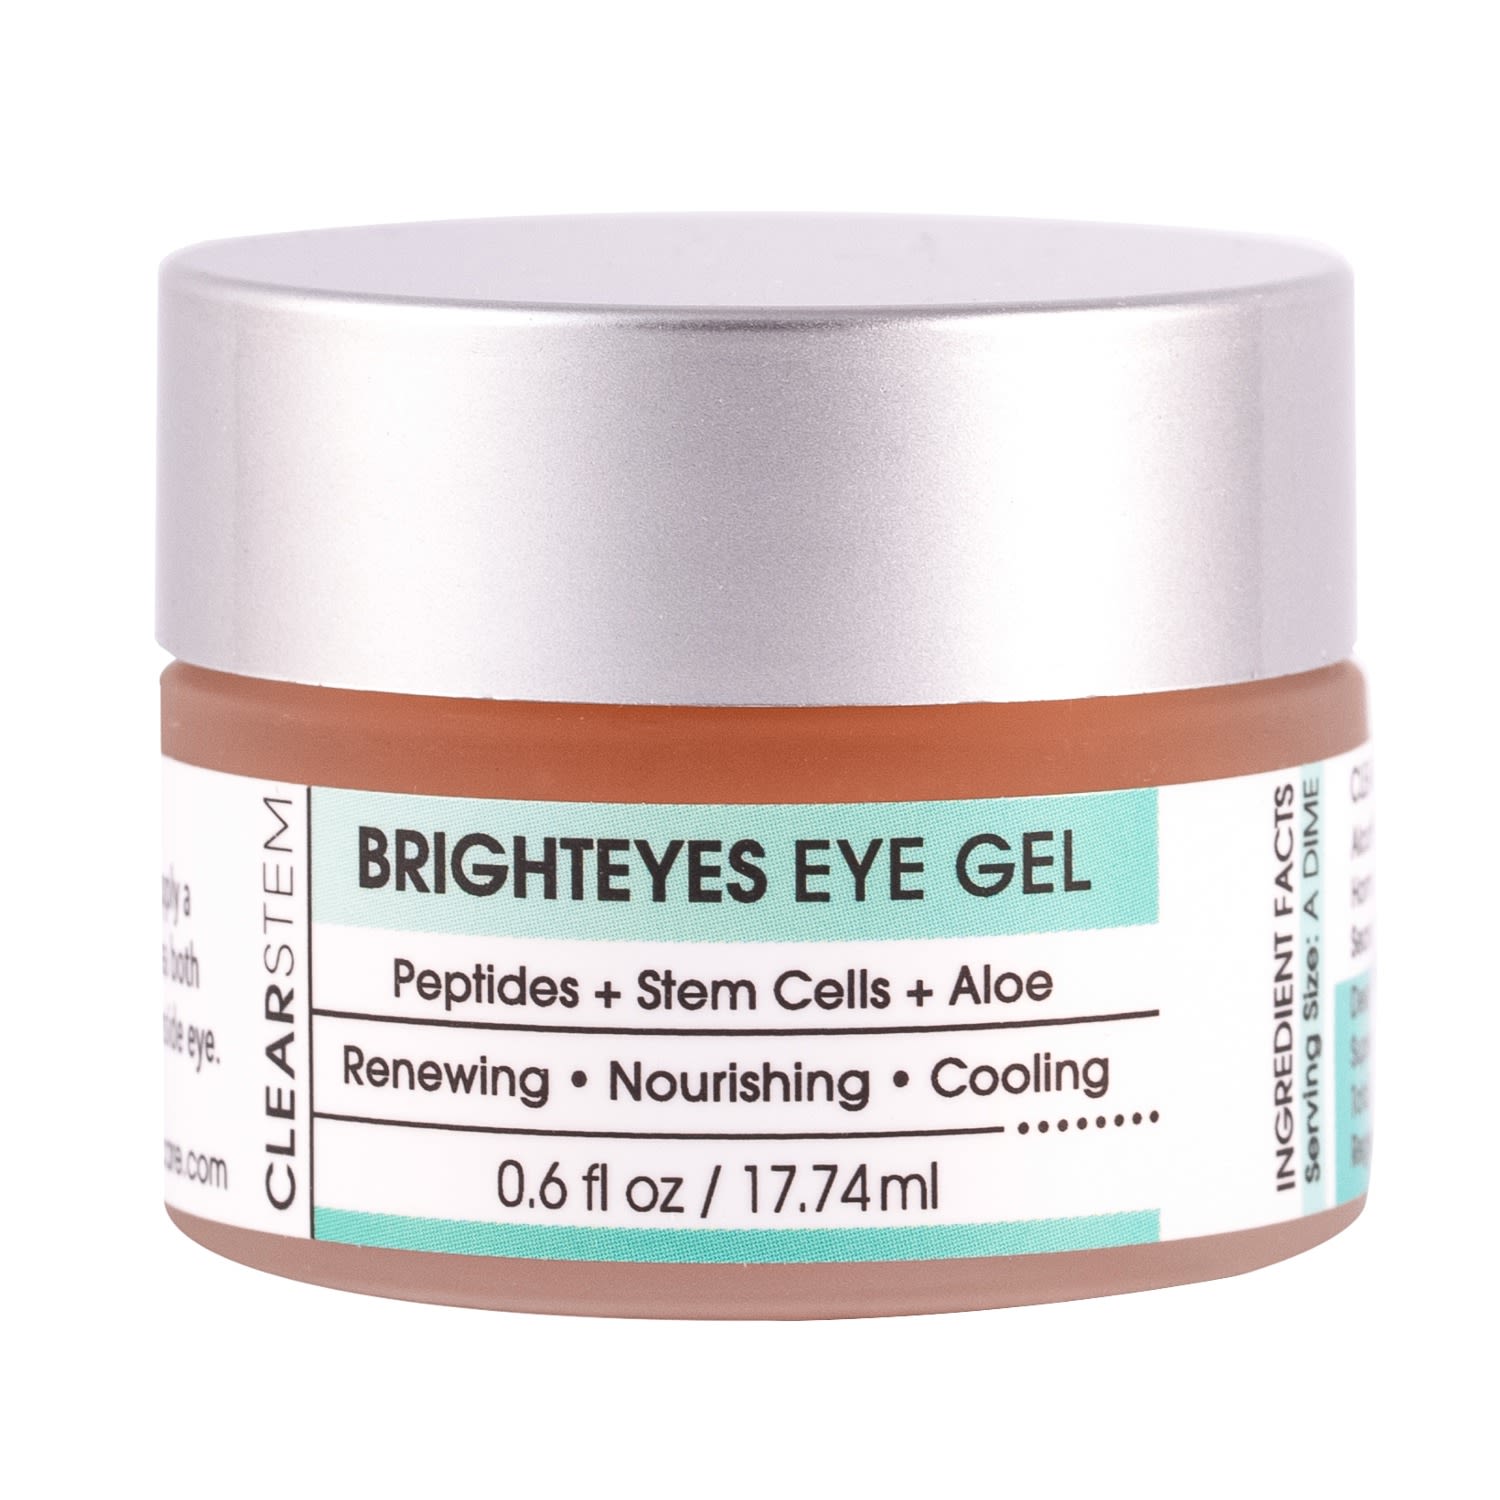 Brighteyes Eye Gel One Size Clearstem Skincare